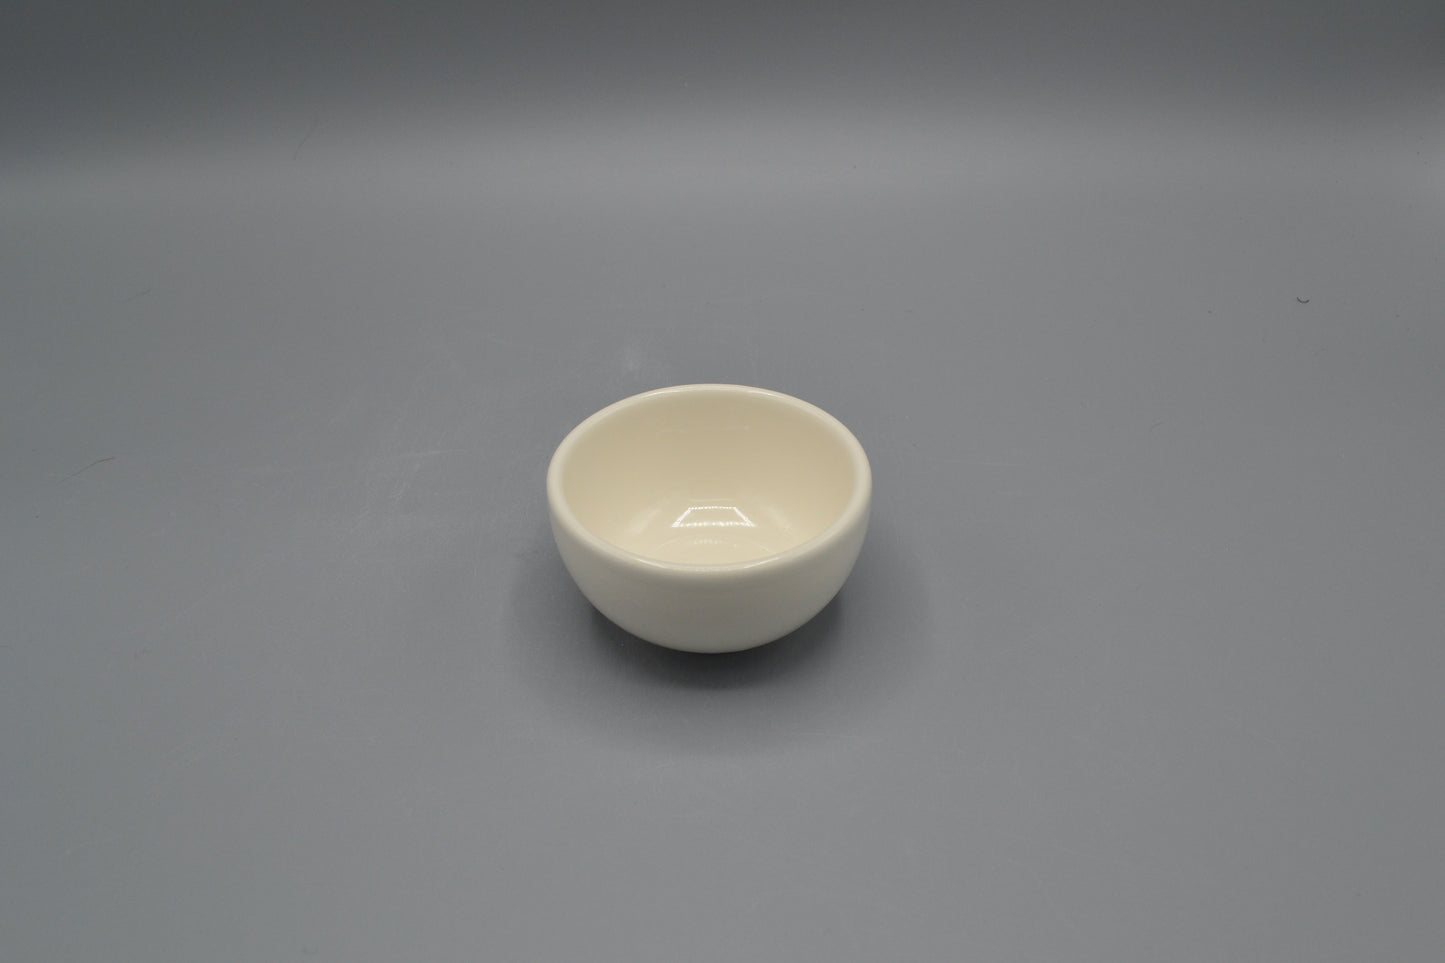 Ciotola in ceramica LUCIDA cristallinata